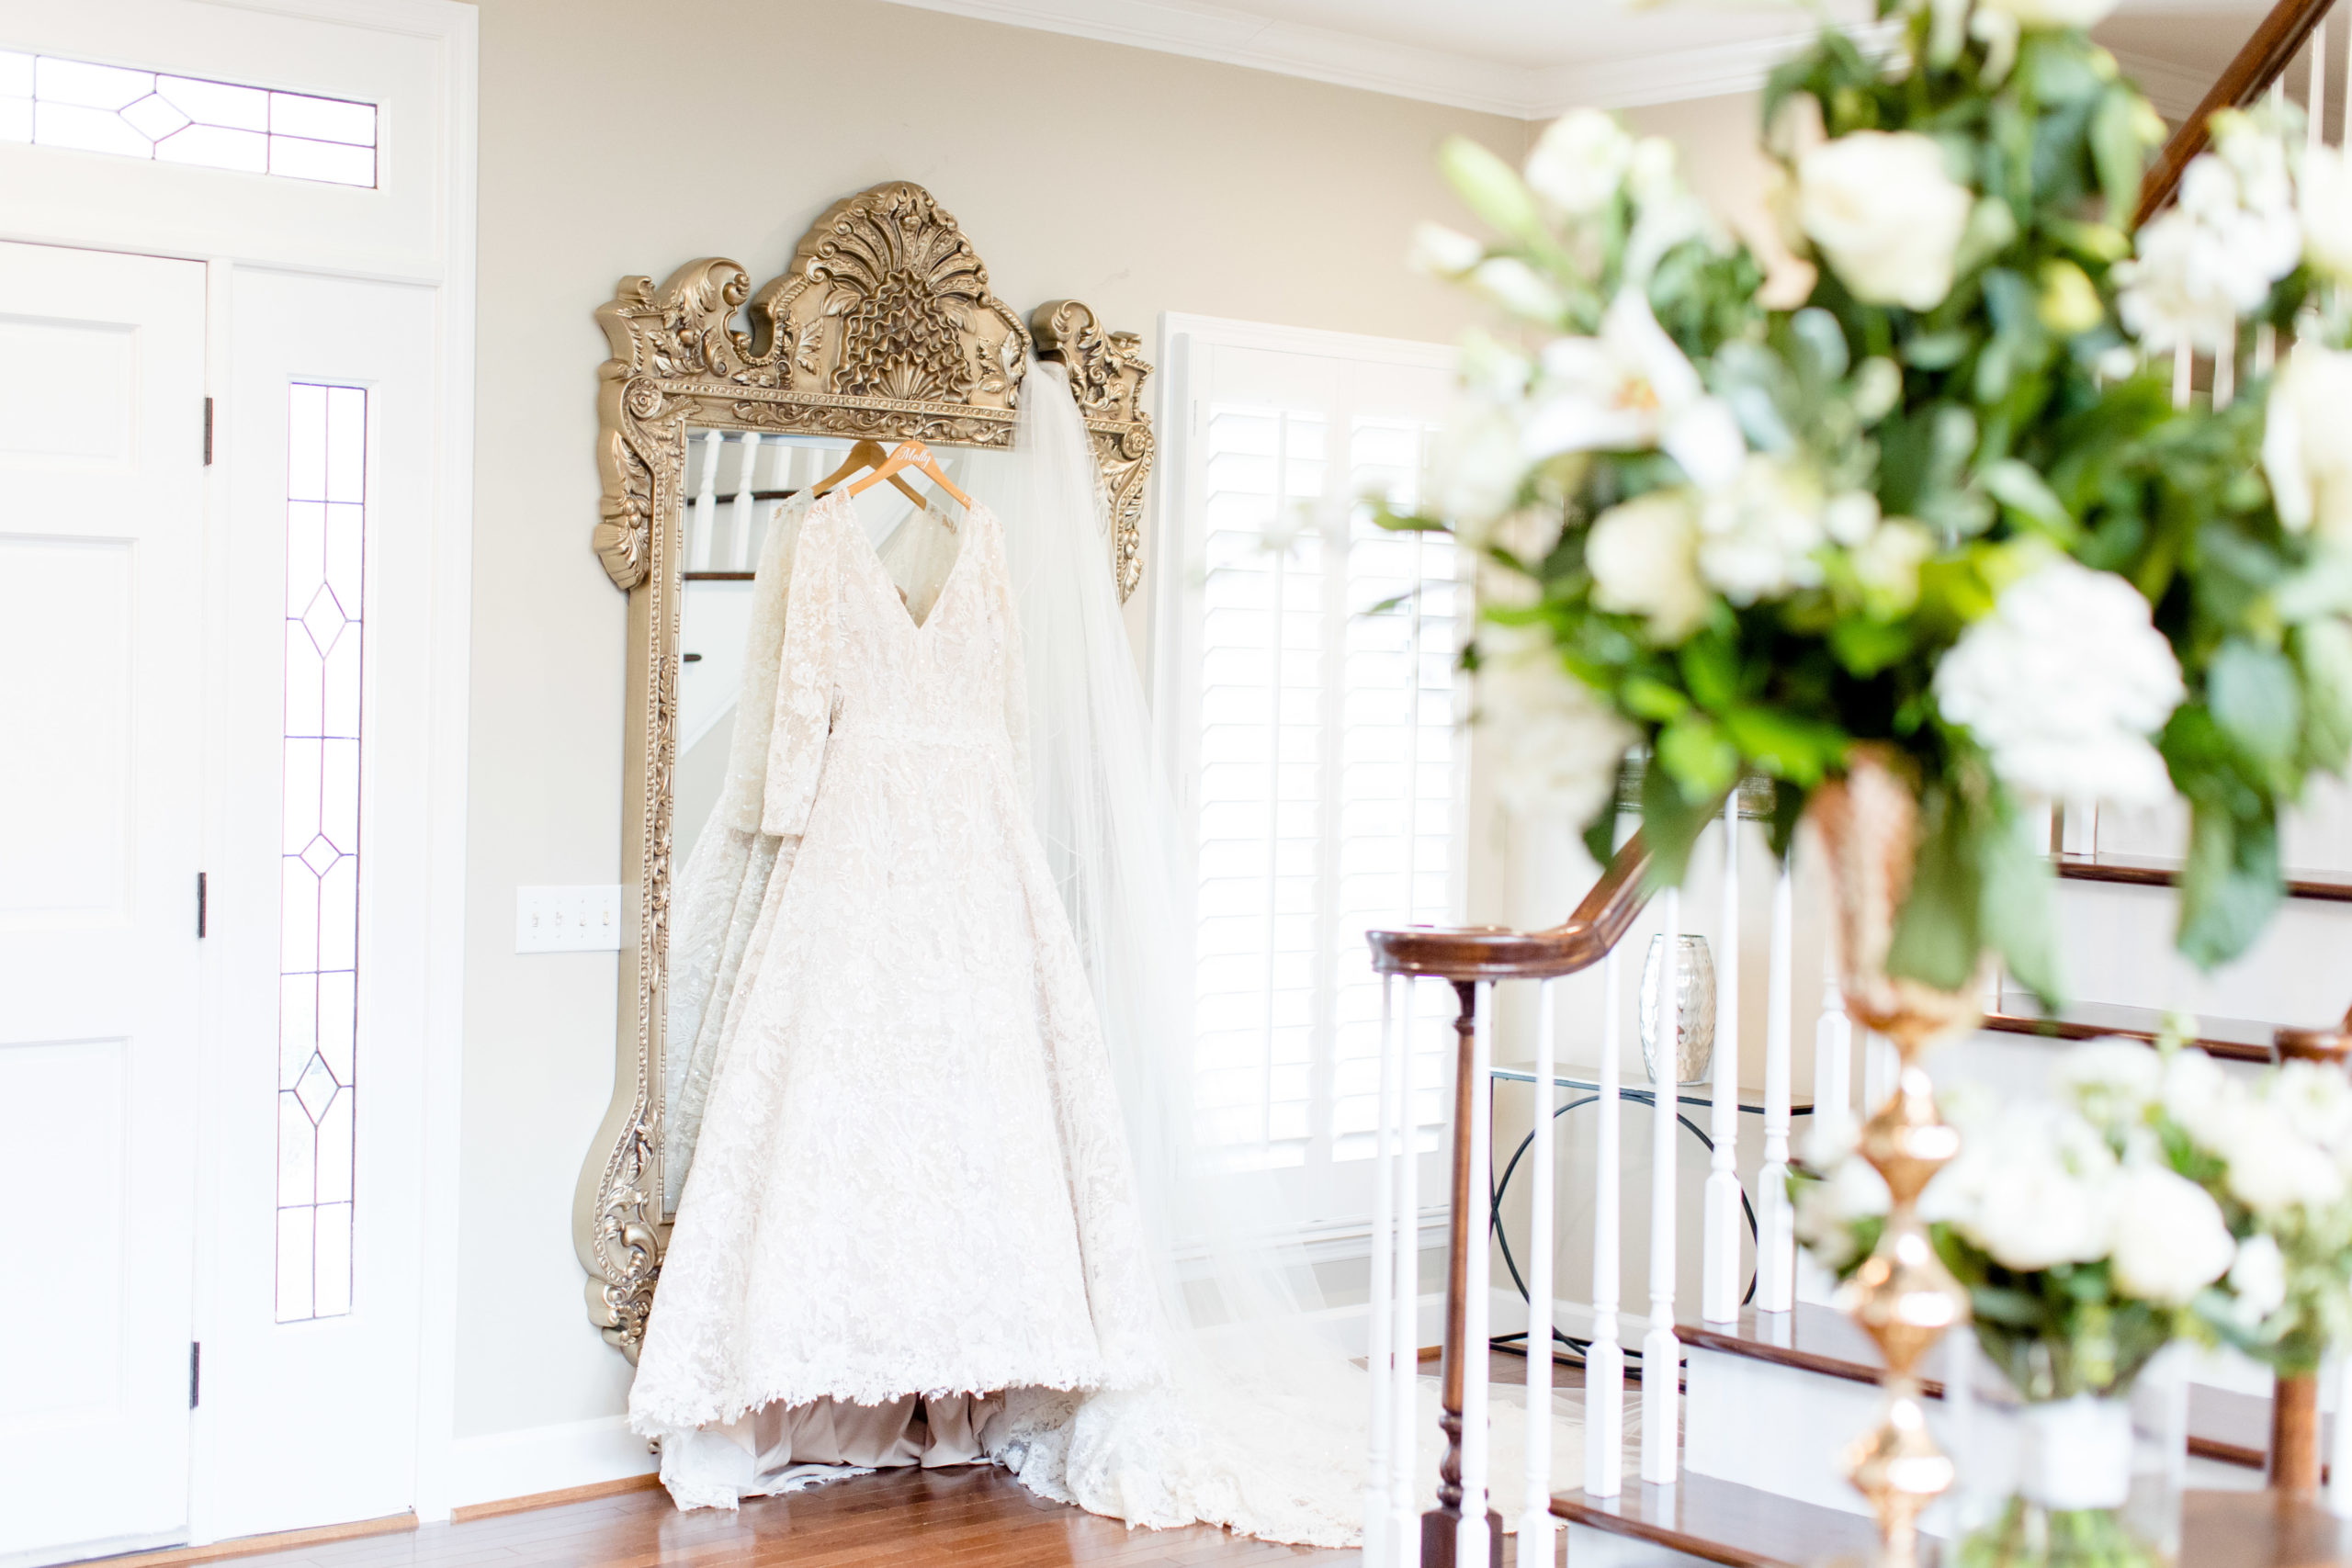 Bride's dress hangs on mirror.